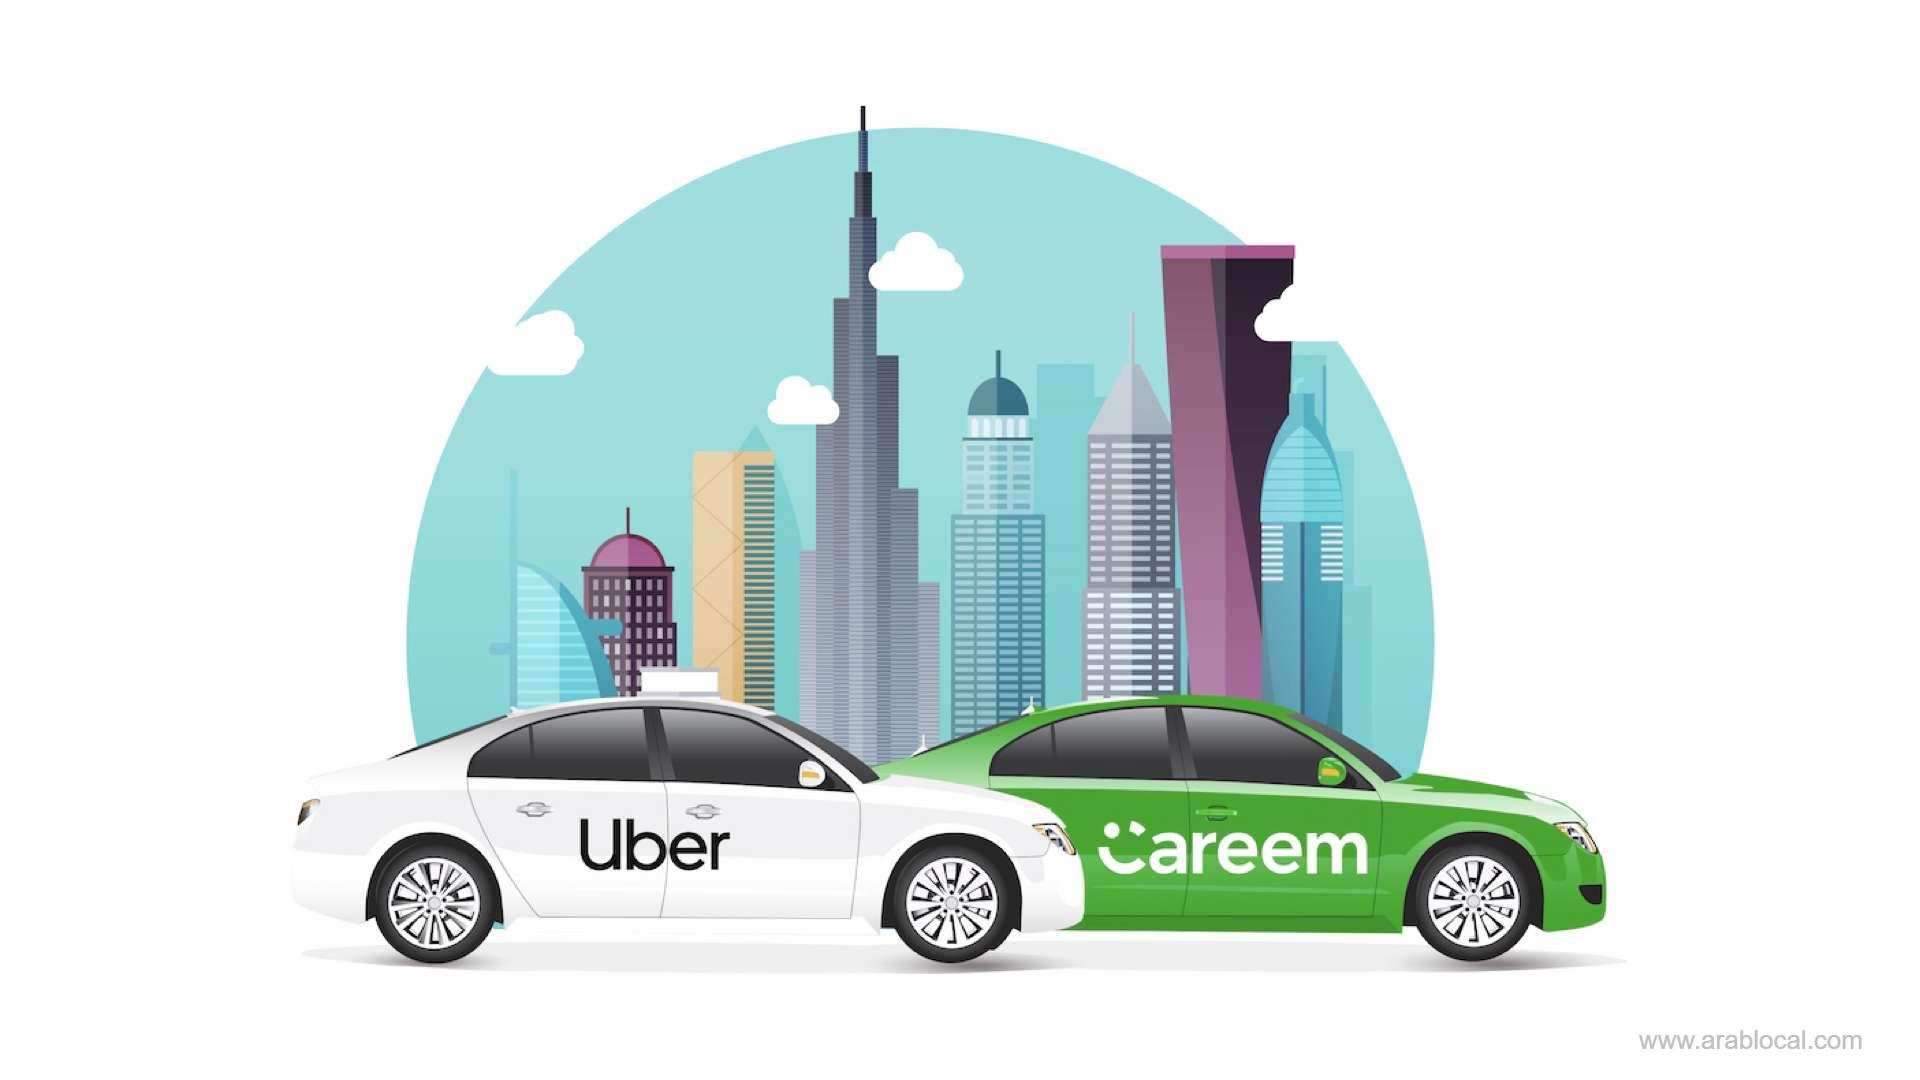 saudi-arabia-restricts-driver-jobs-at-careem-uber-like-apps-to-saudi-citizens-saudi